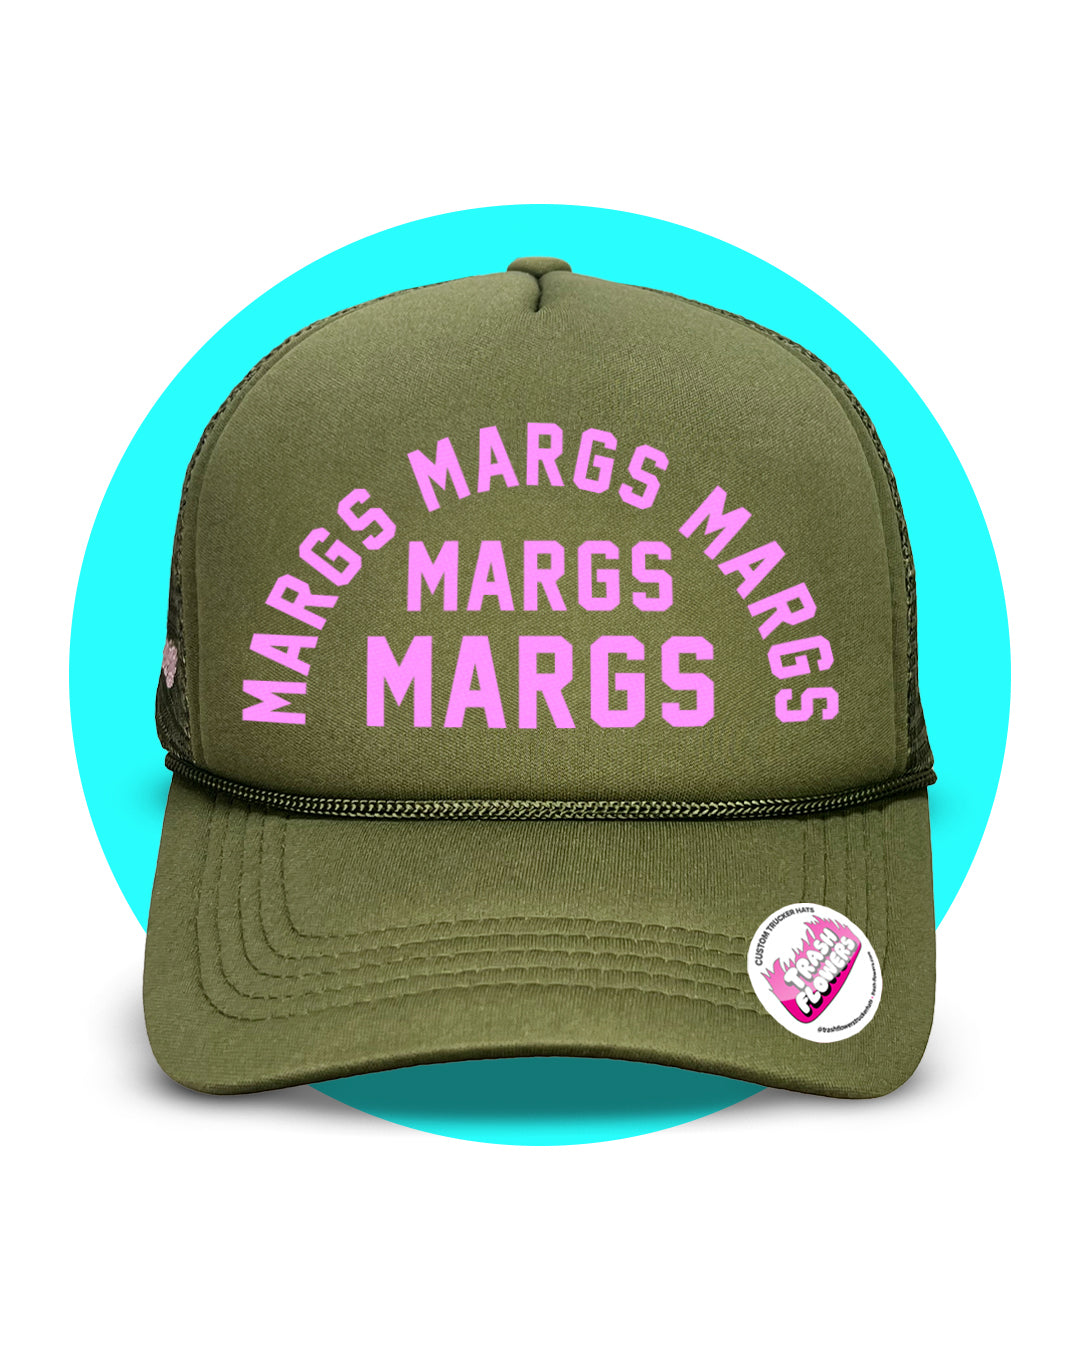 Margs Margs Margs Trucker Hat